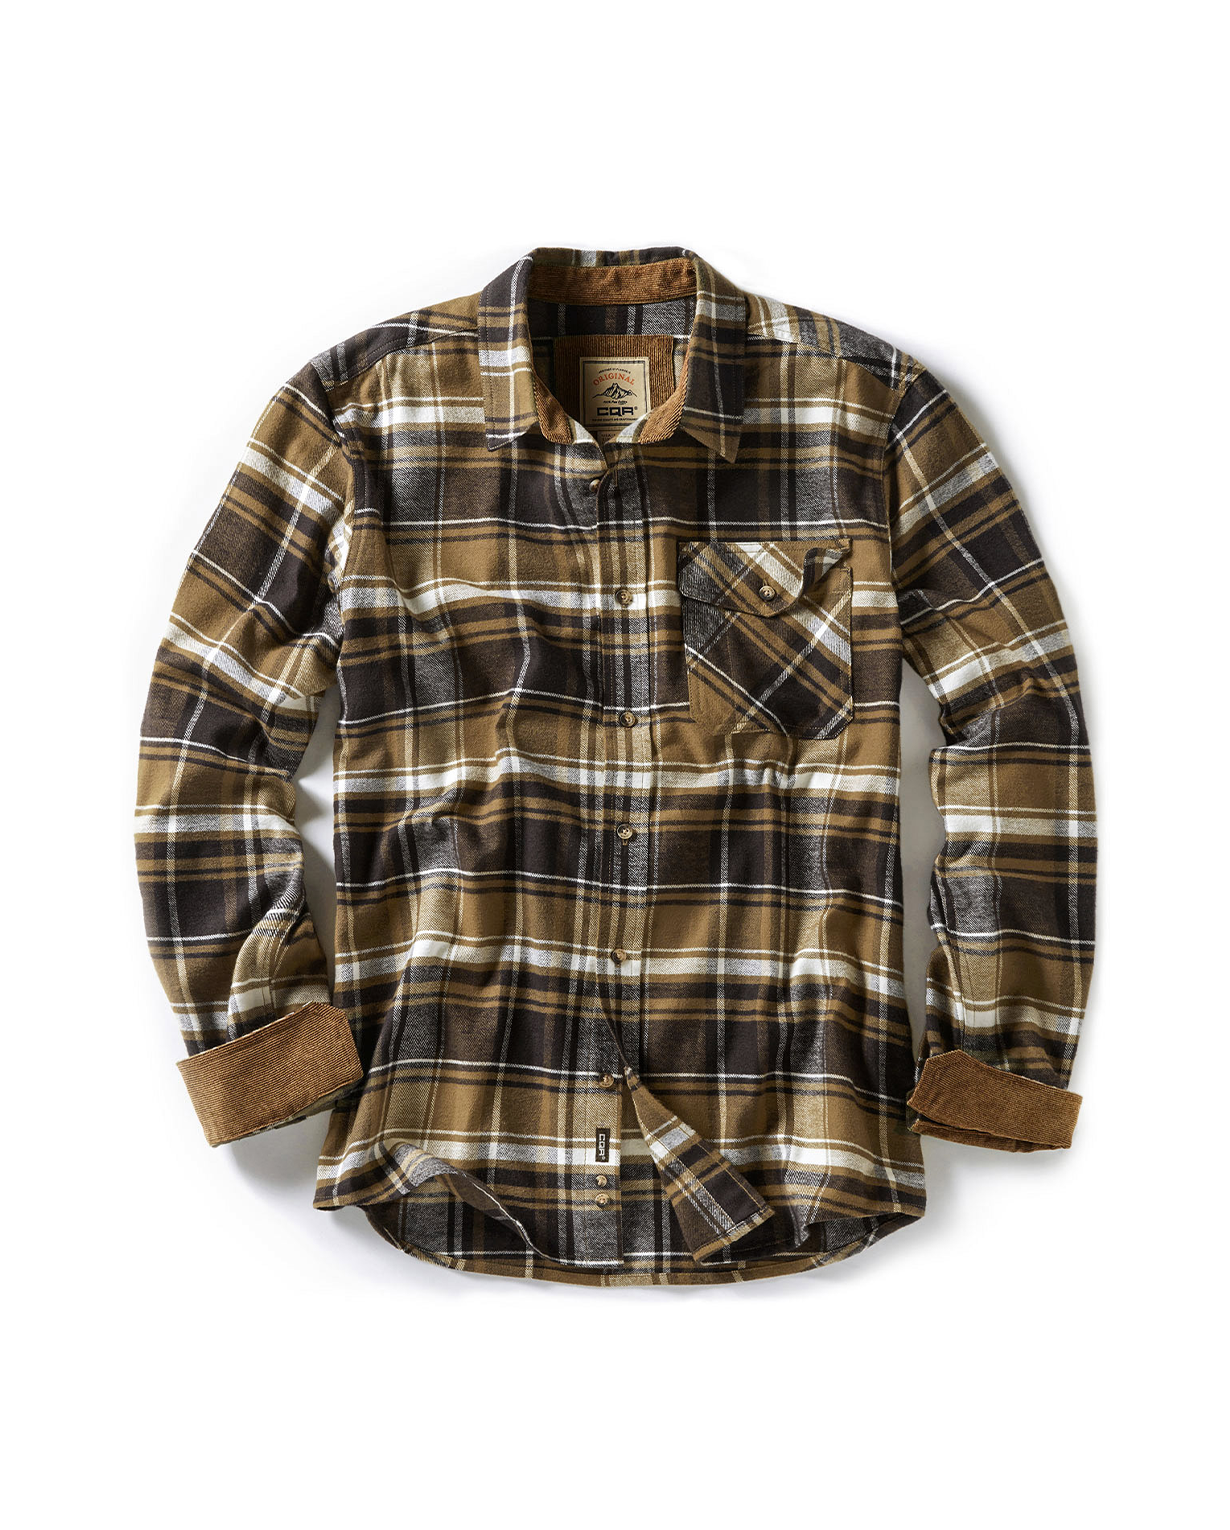 [HOF110] Plaid Gear Shirt – CQR-Tactical Flannel